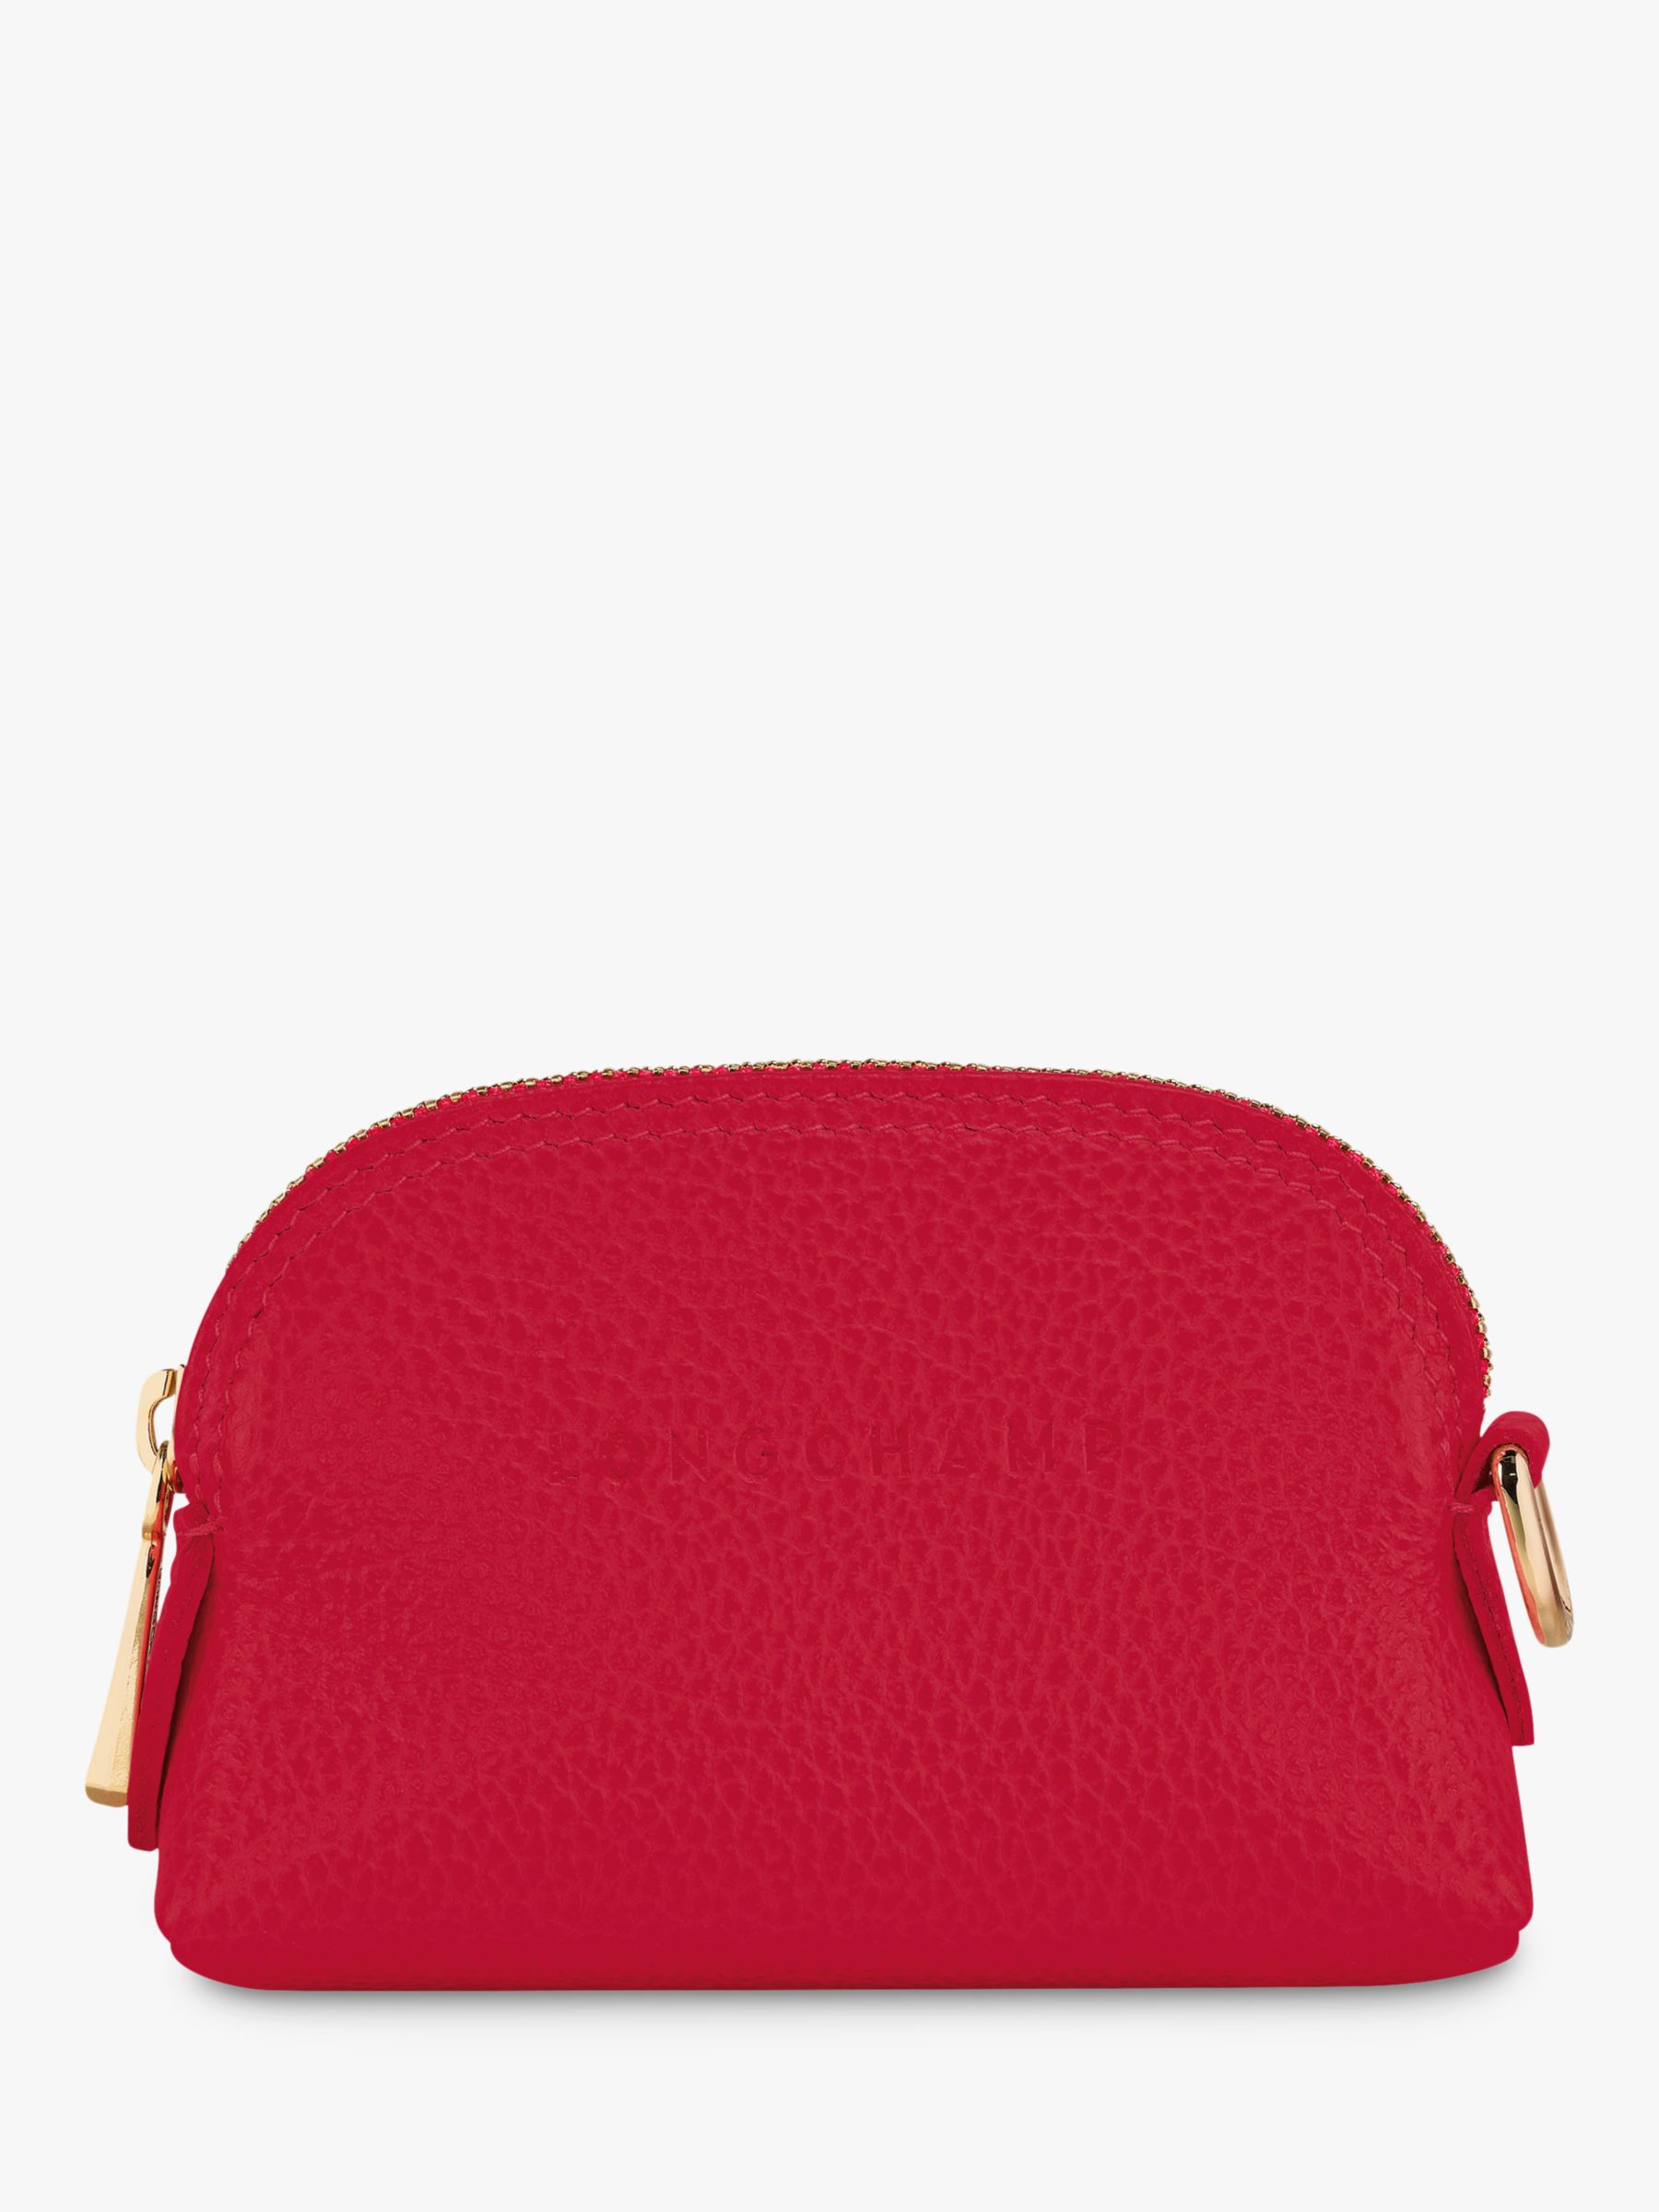 Longchamp Le Pliage Original Shoulder Bag, Deep Red at John Lewis & Partners